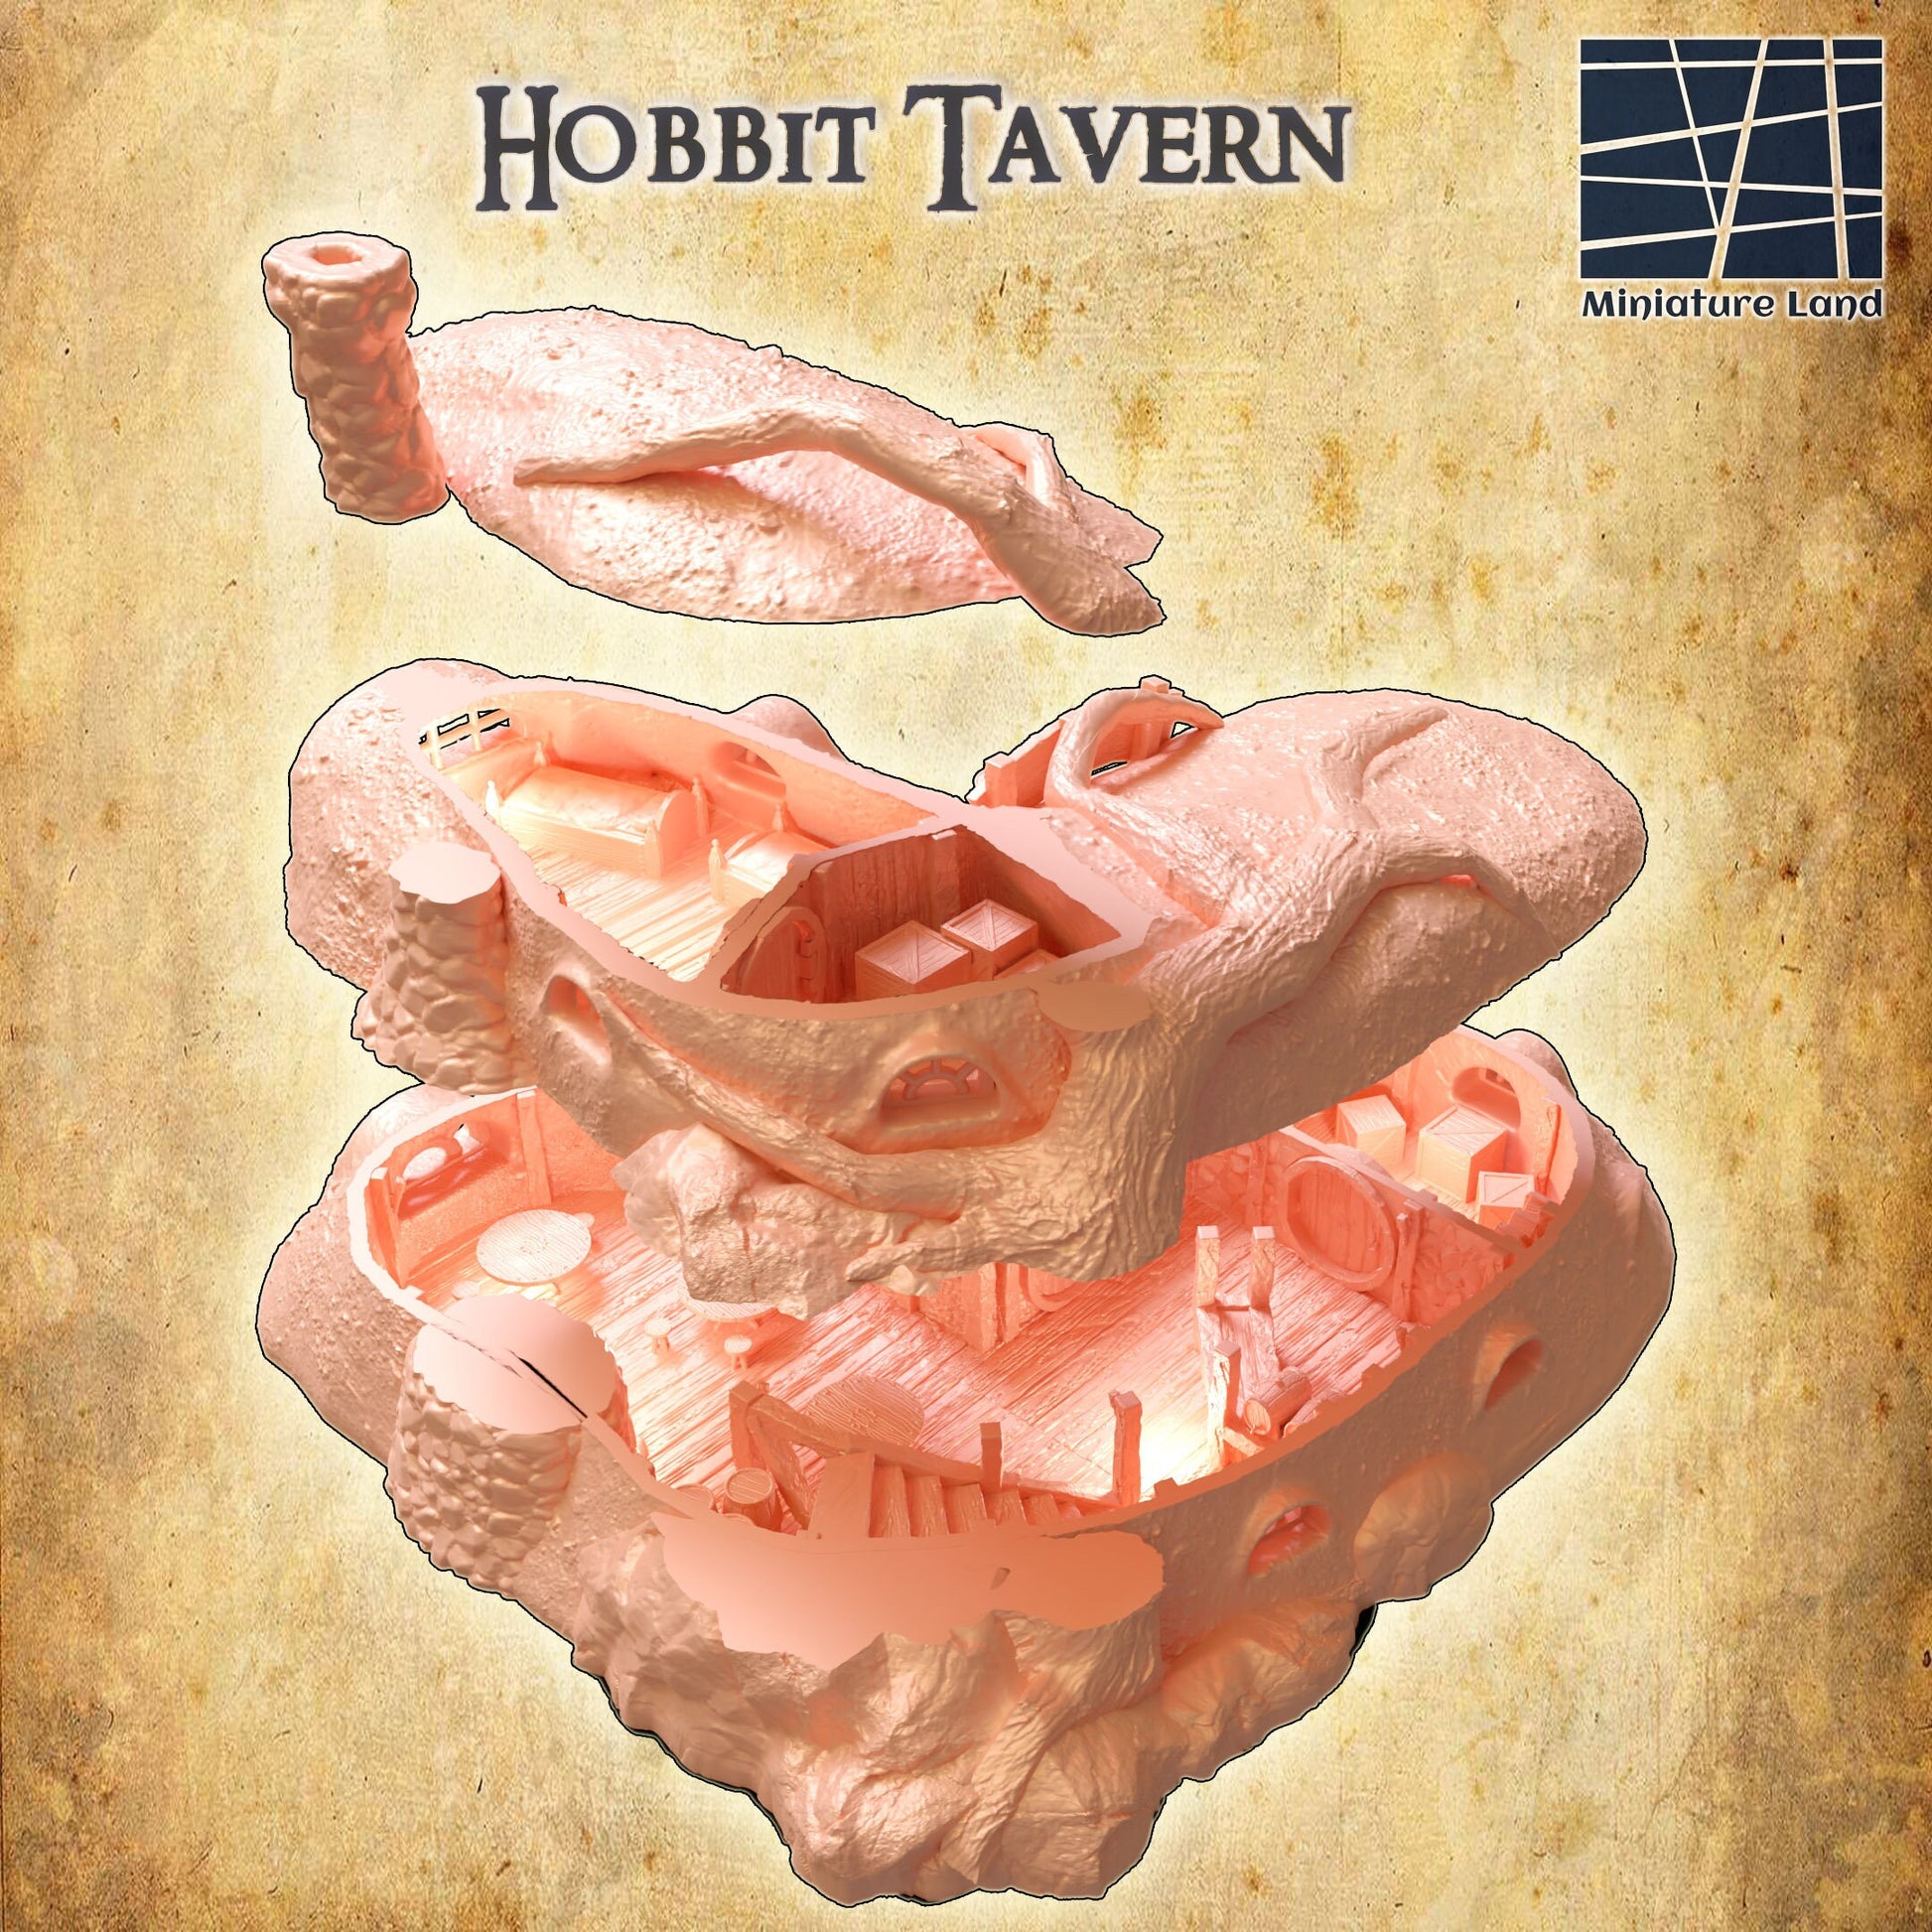 Small Hobbit Tavern, Hobbit Terrain, Hobbit Tavern